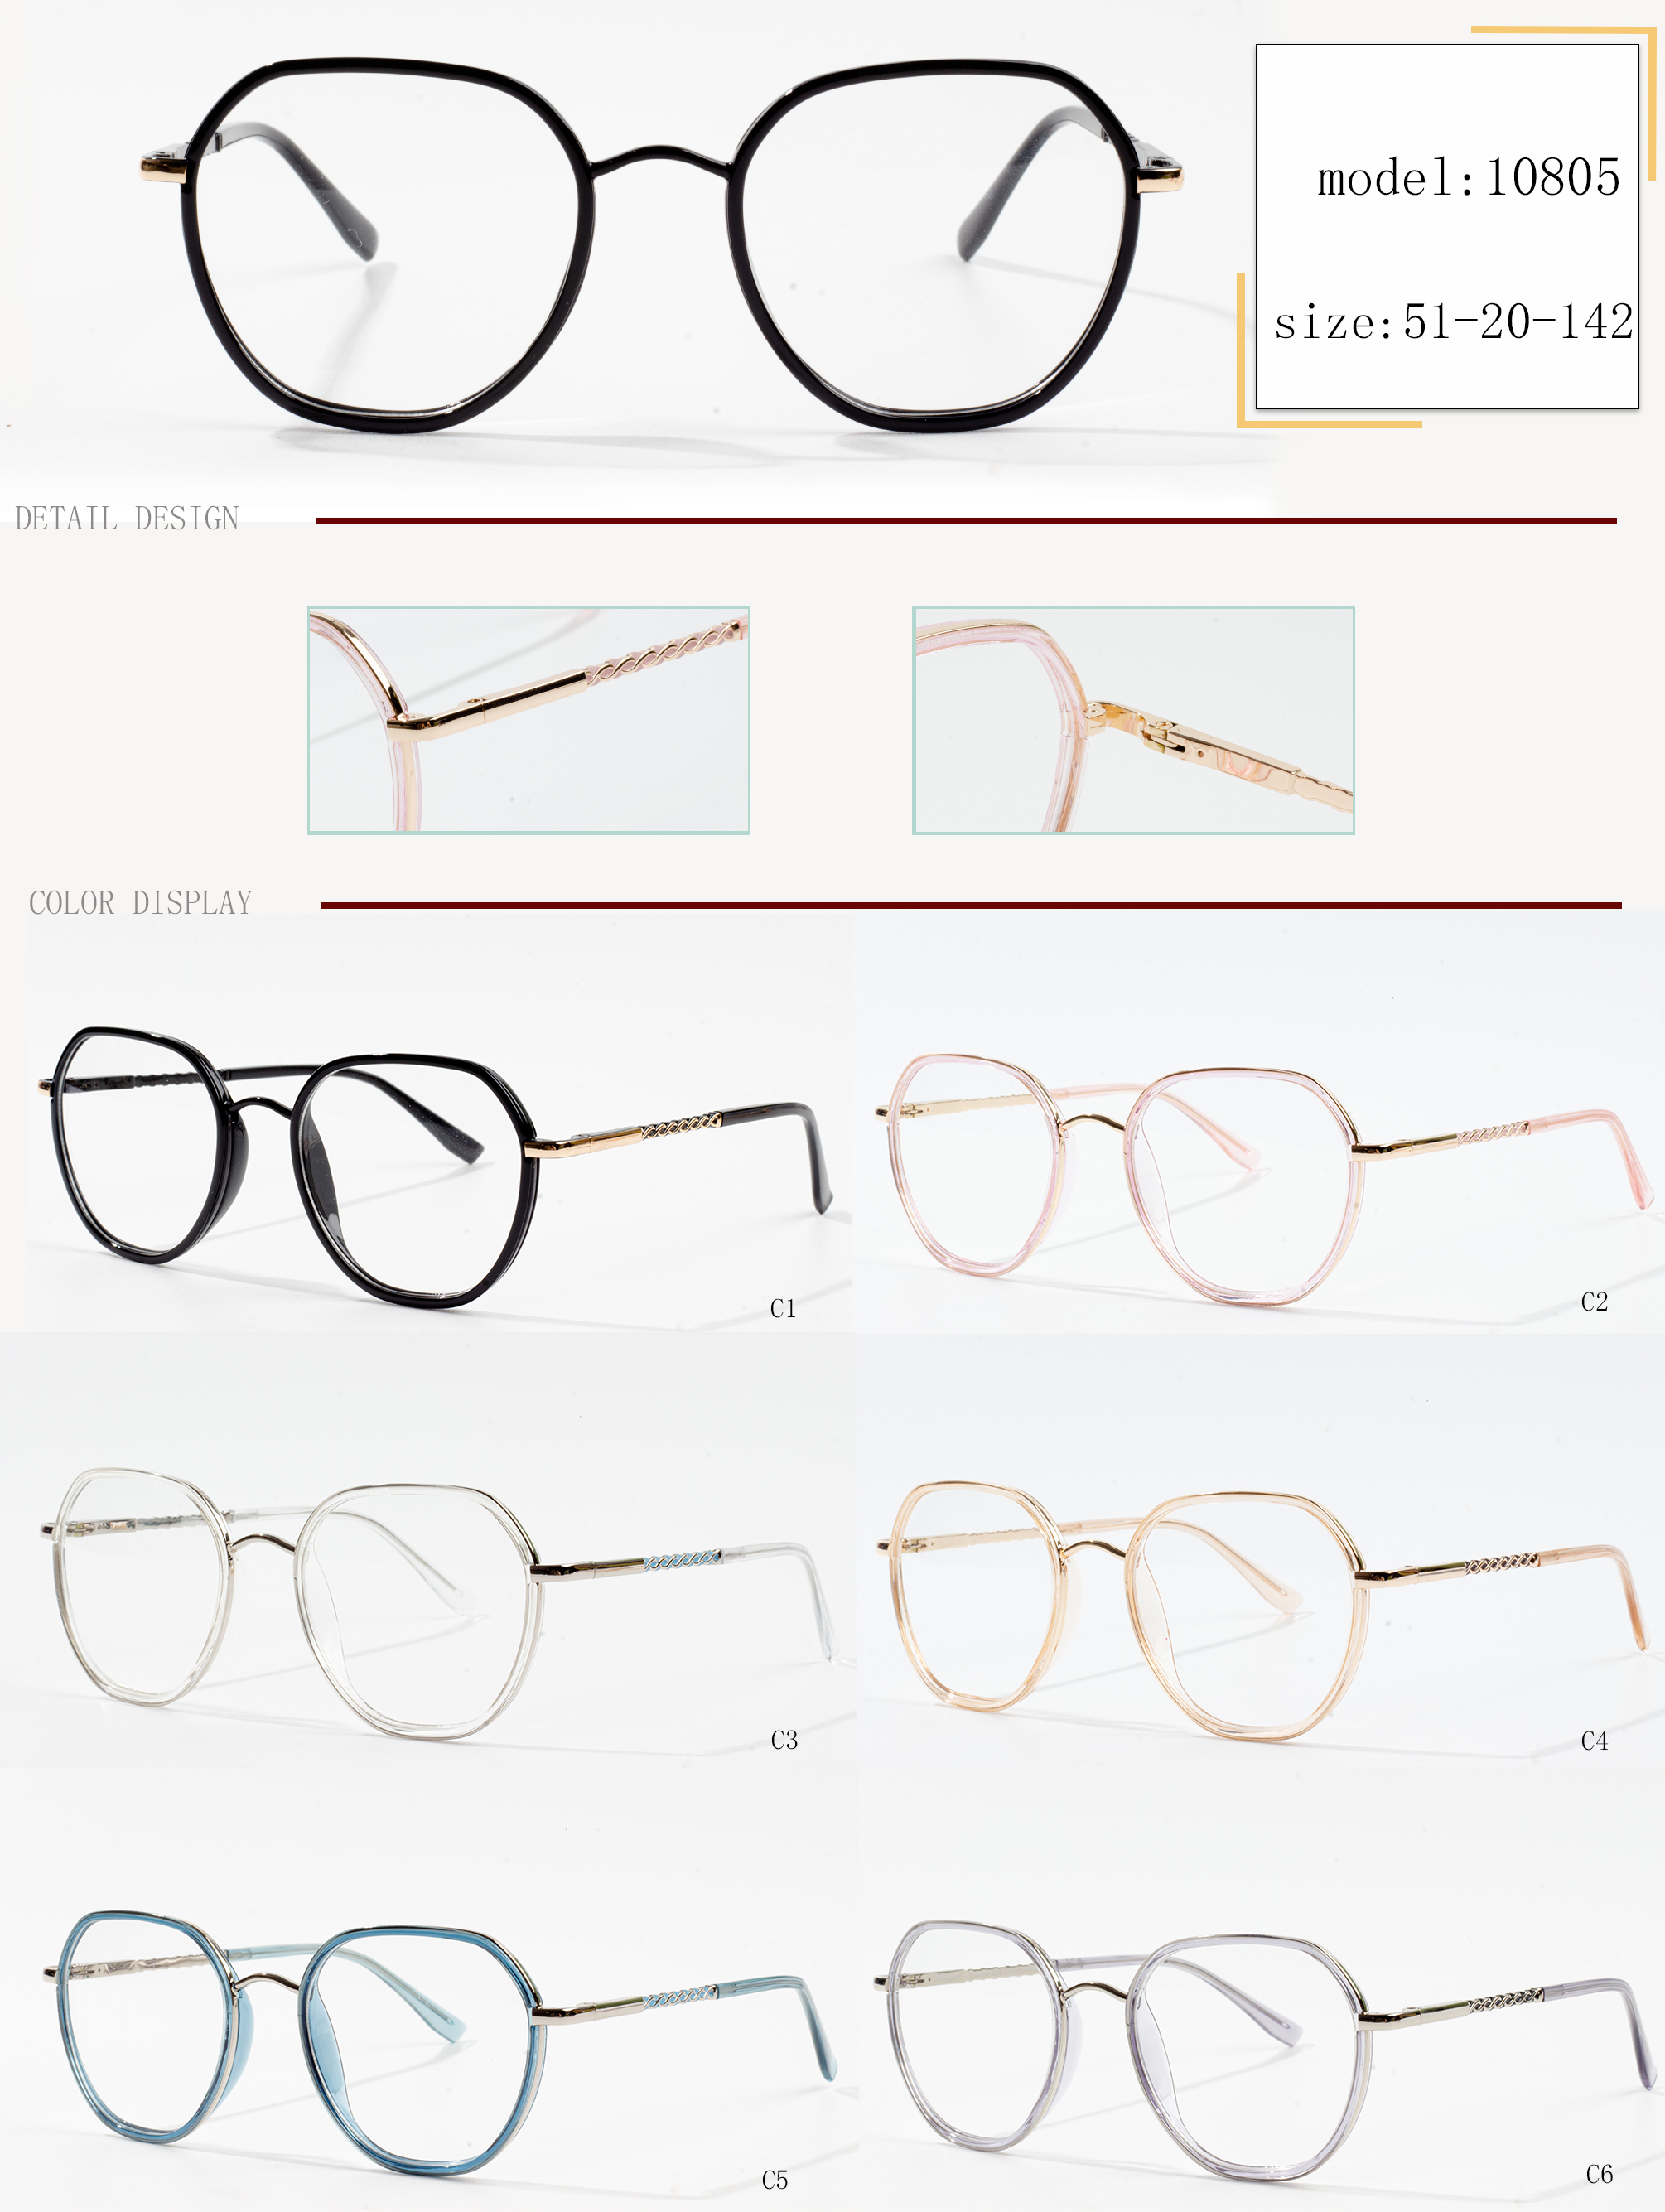 alium eyeglass tabulas